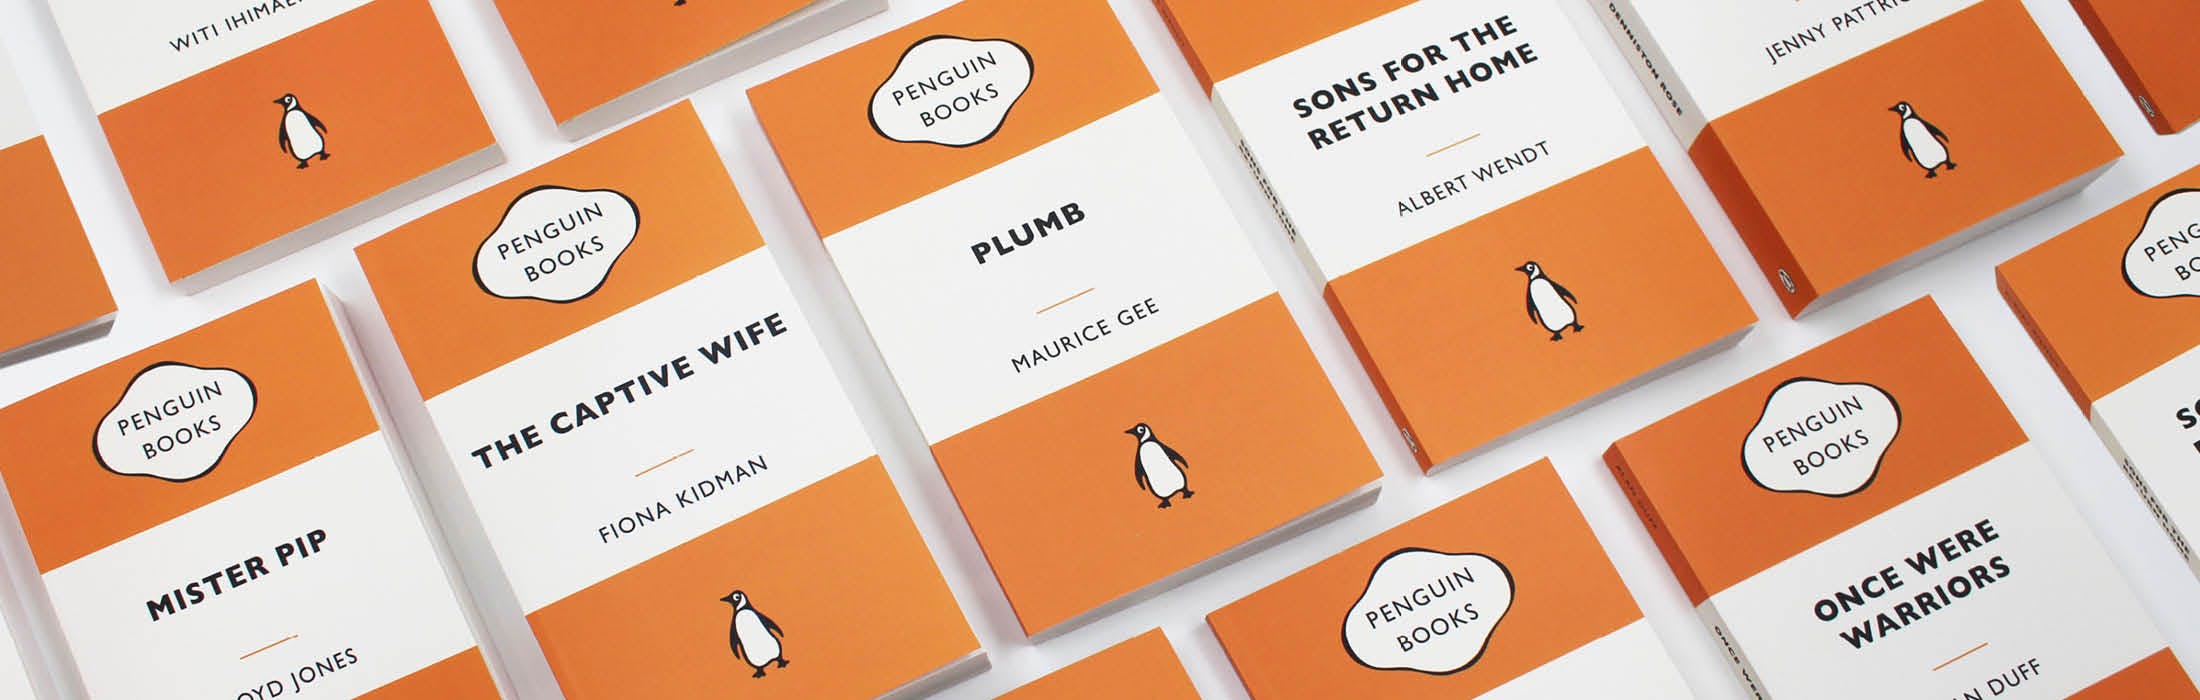 The New Zealand Popular Penguin Line-up